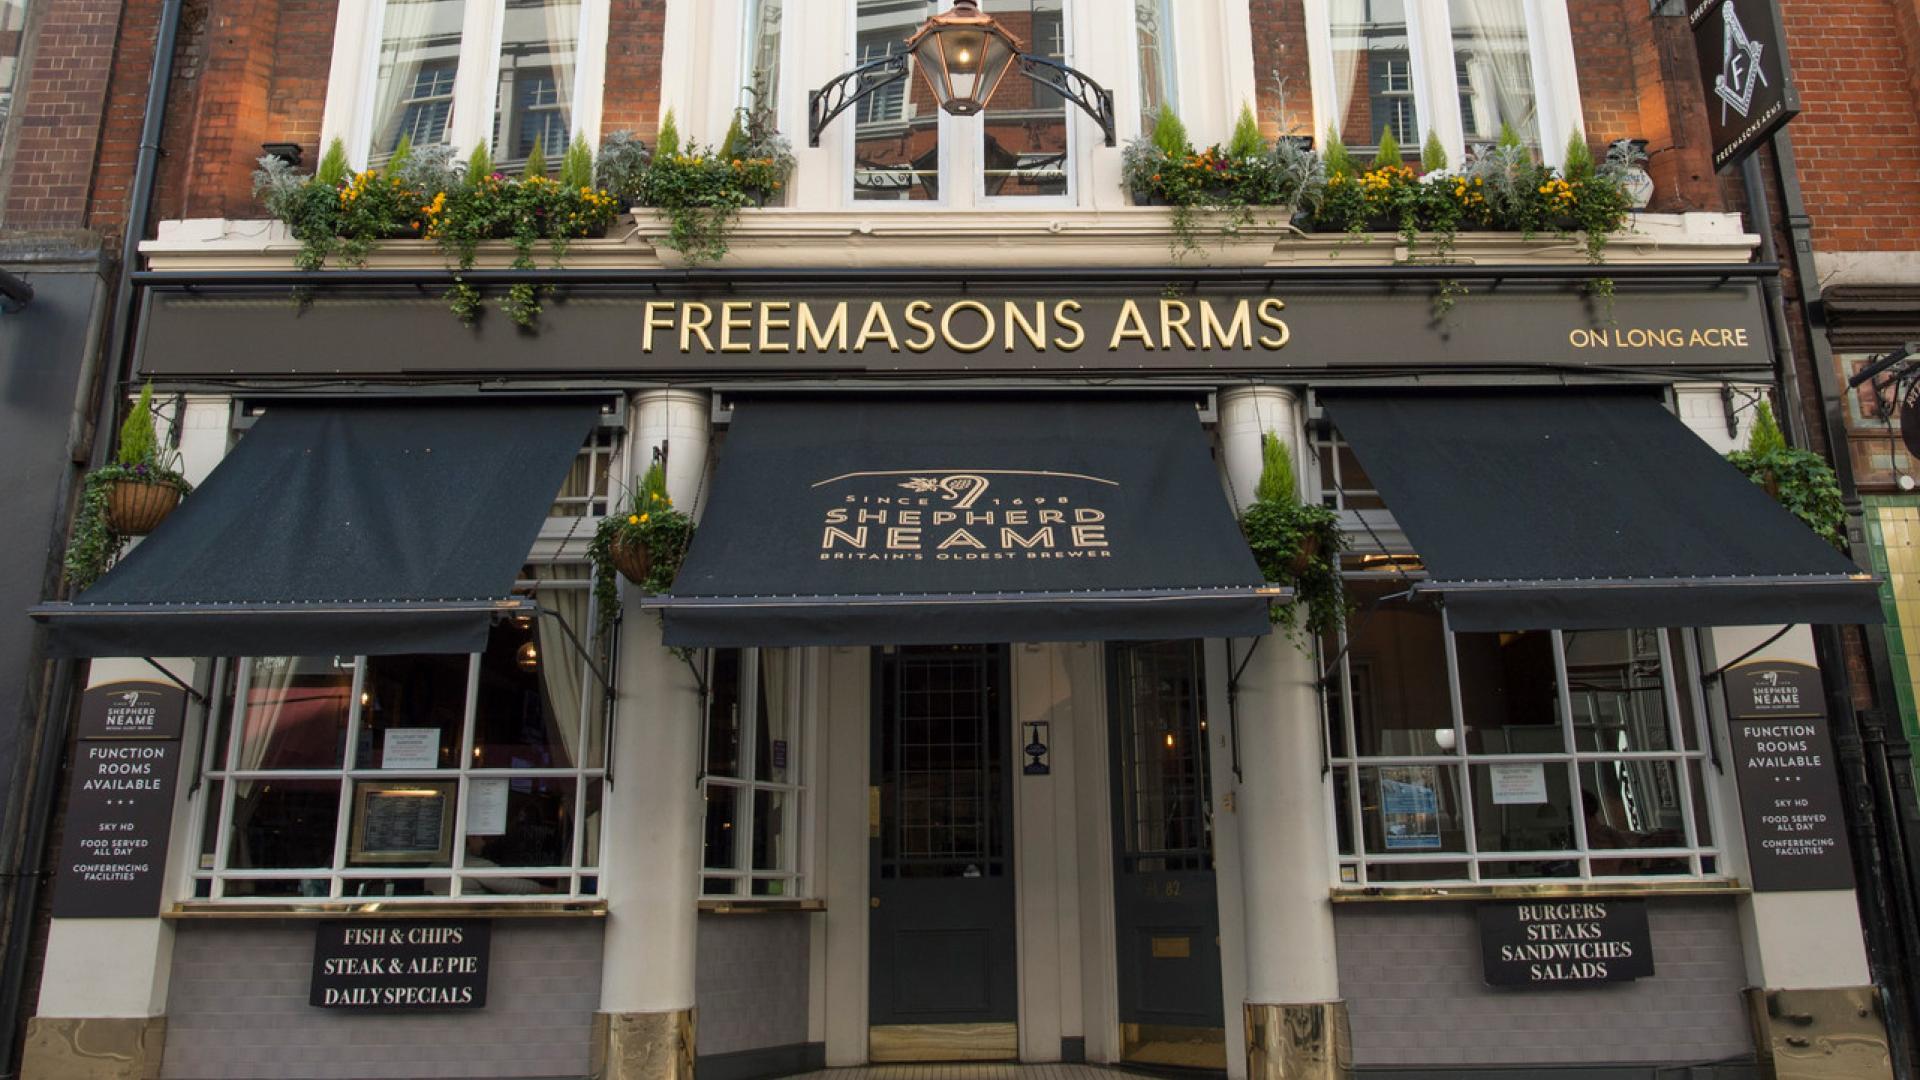 Freemasons Arms pub, Covent Garden, London, Shepherd Neame